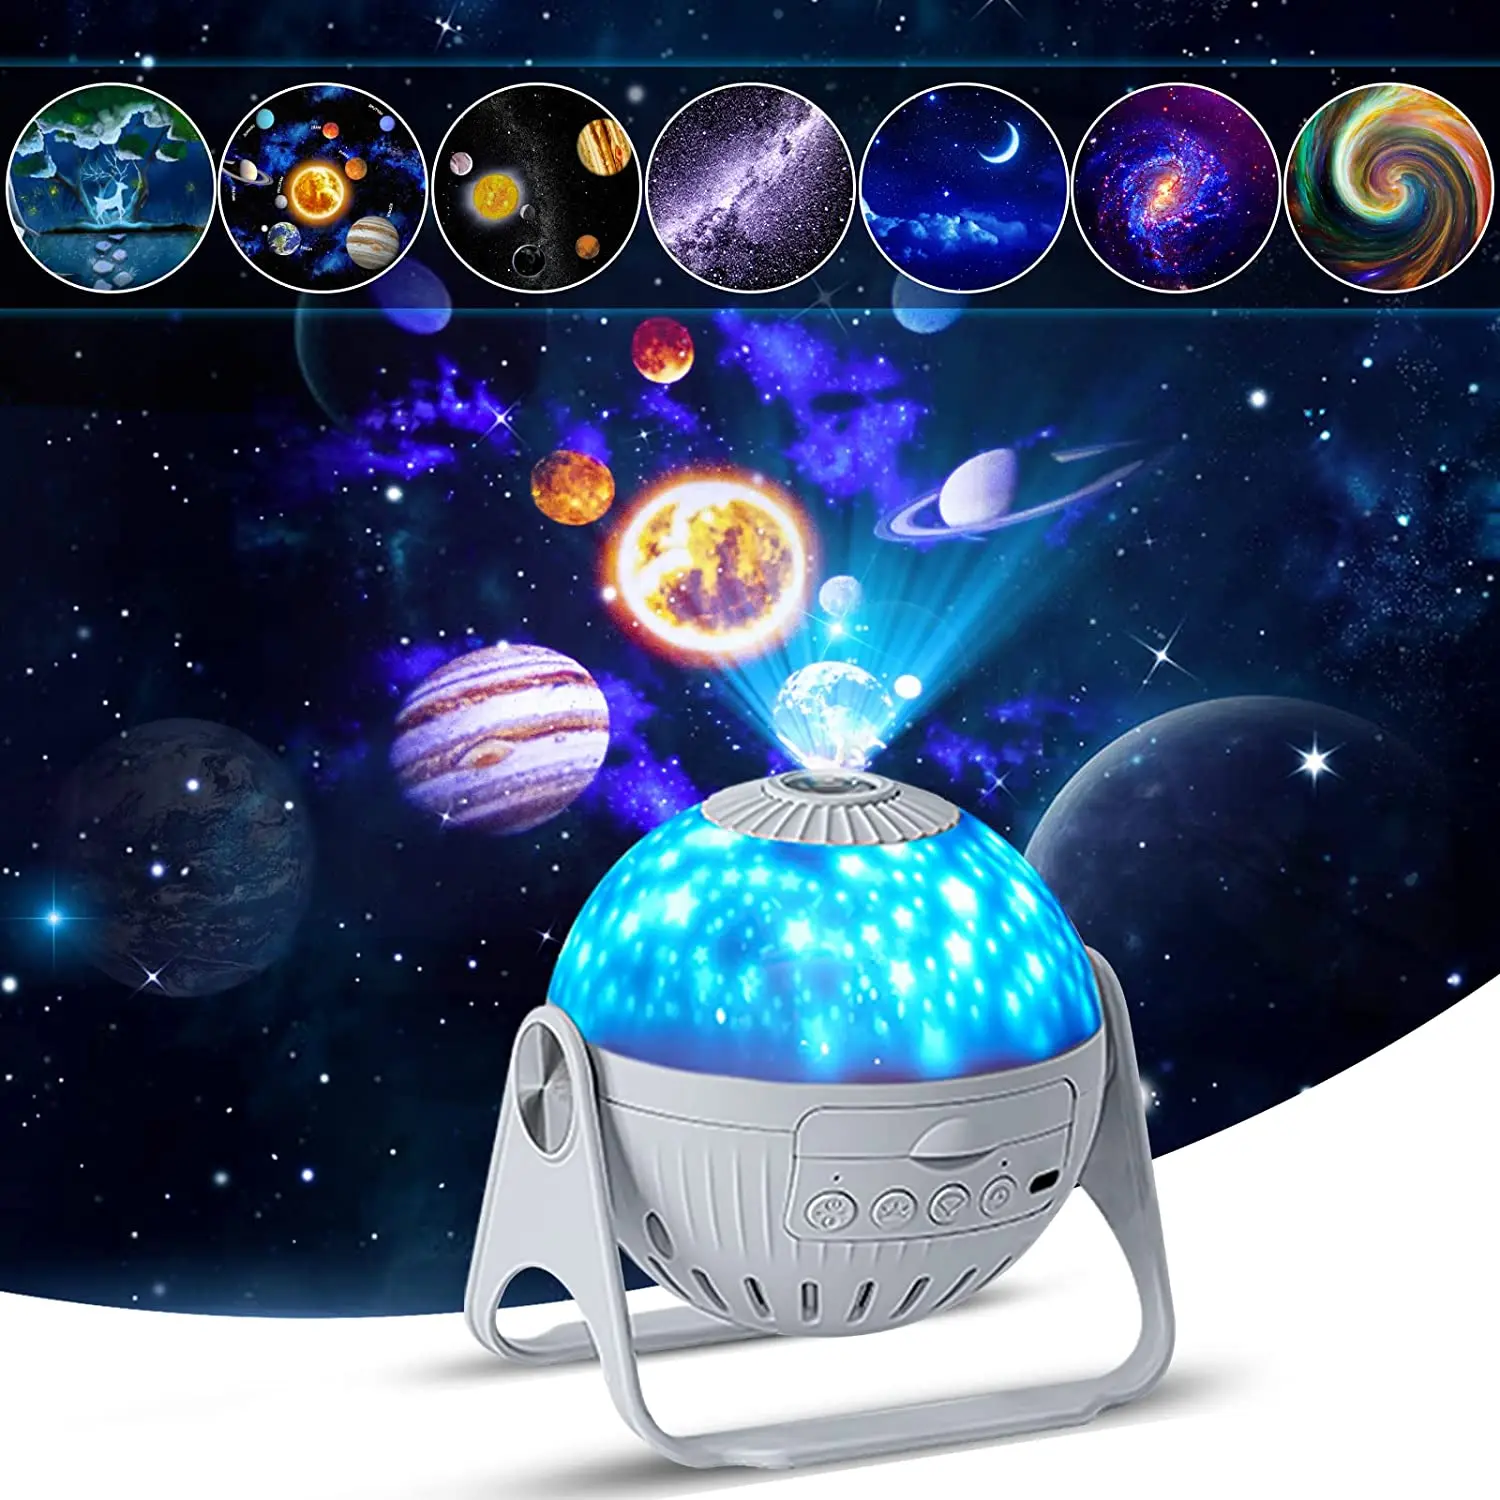 

LED Star Night Lights Galaxy Projector 360° Rotate Planetarium Starry Sky Projector Lamp for Kids Bedroom Room Decor Nightlights